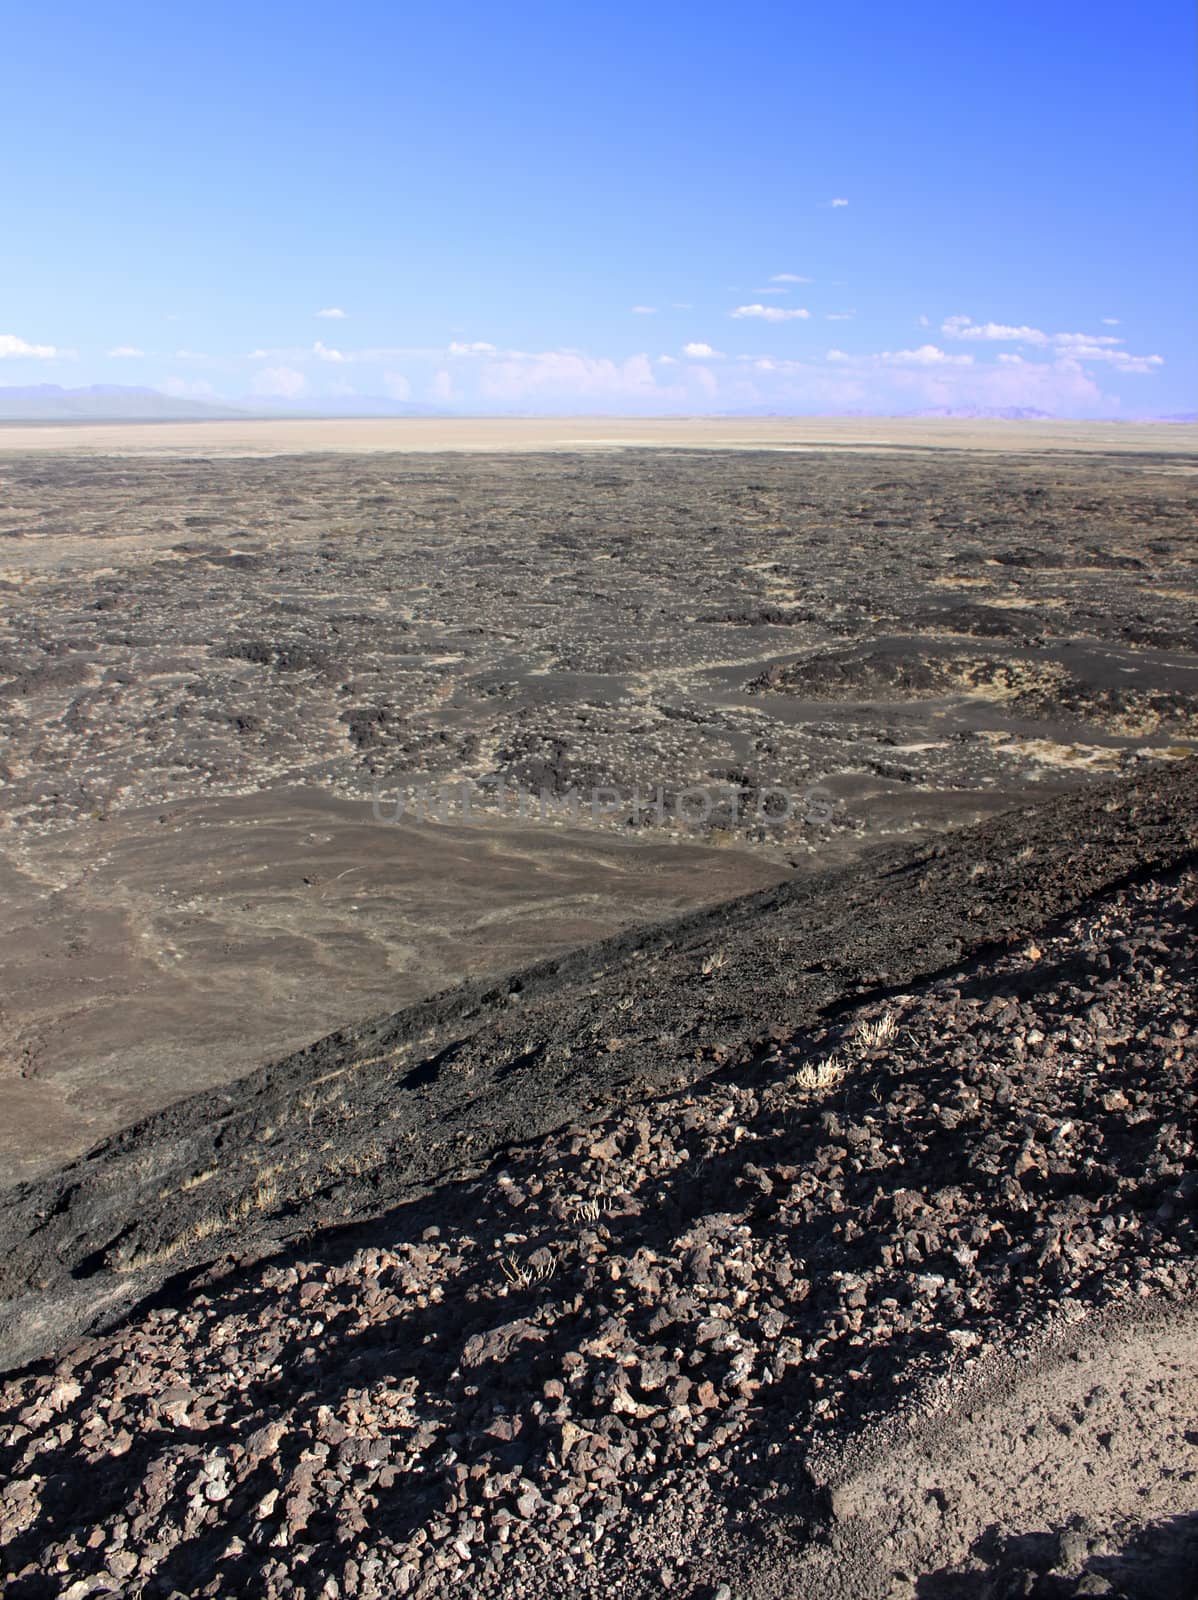 Volcanic rock scatters the desert around Amboy Crater National Natural Landmark in California.